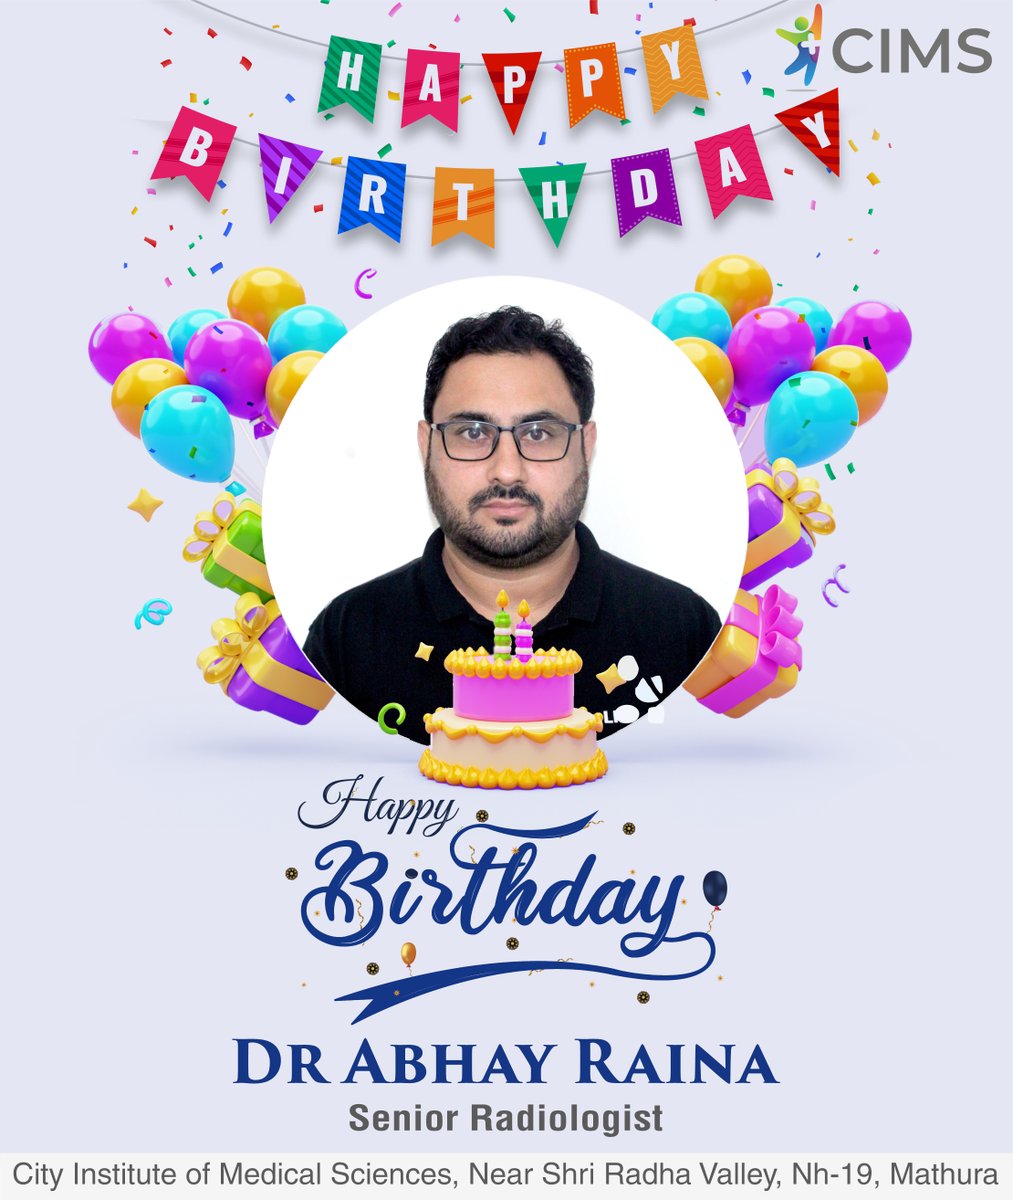 Wish you very Happy Birthday Dr. Abhay Raina, Senior Radiologist
#HappyBirthday #DrAbhayRaina #Radiologist
#CityInstituteOfMedicalSciences #CimsHospital #Mathura
Call Now : 9258113570, 9258113571